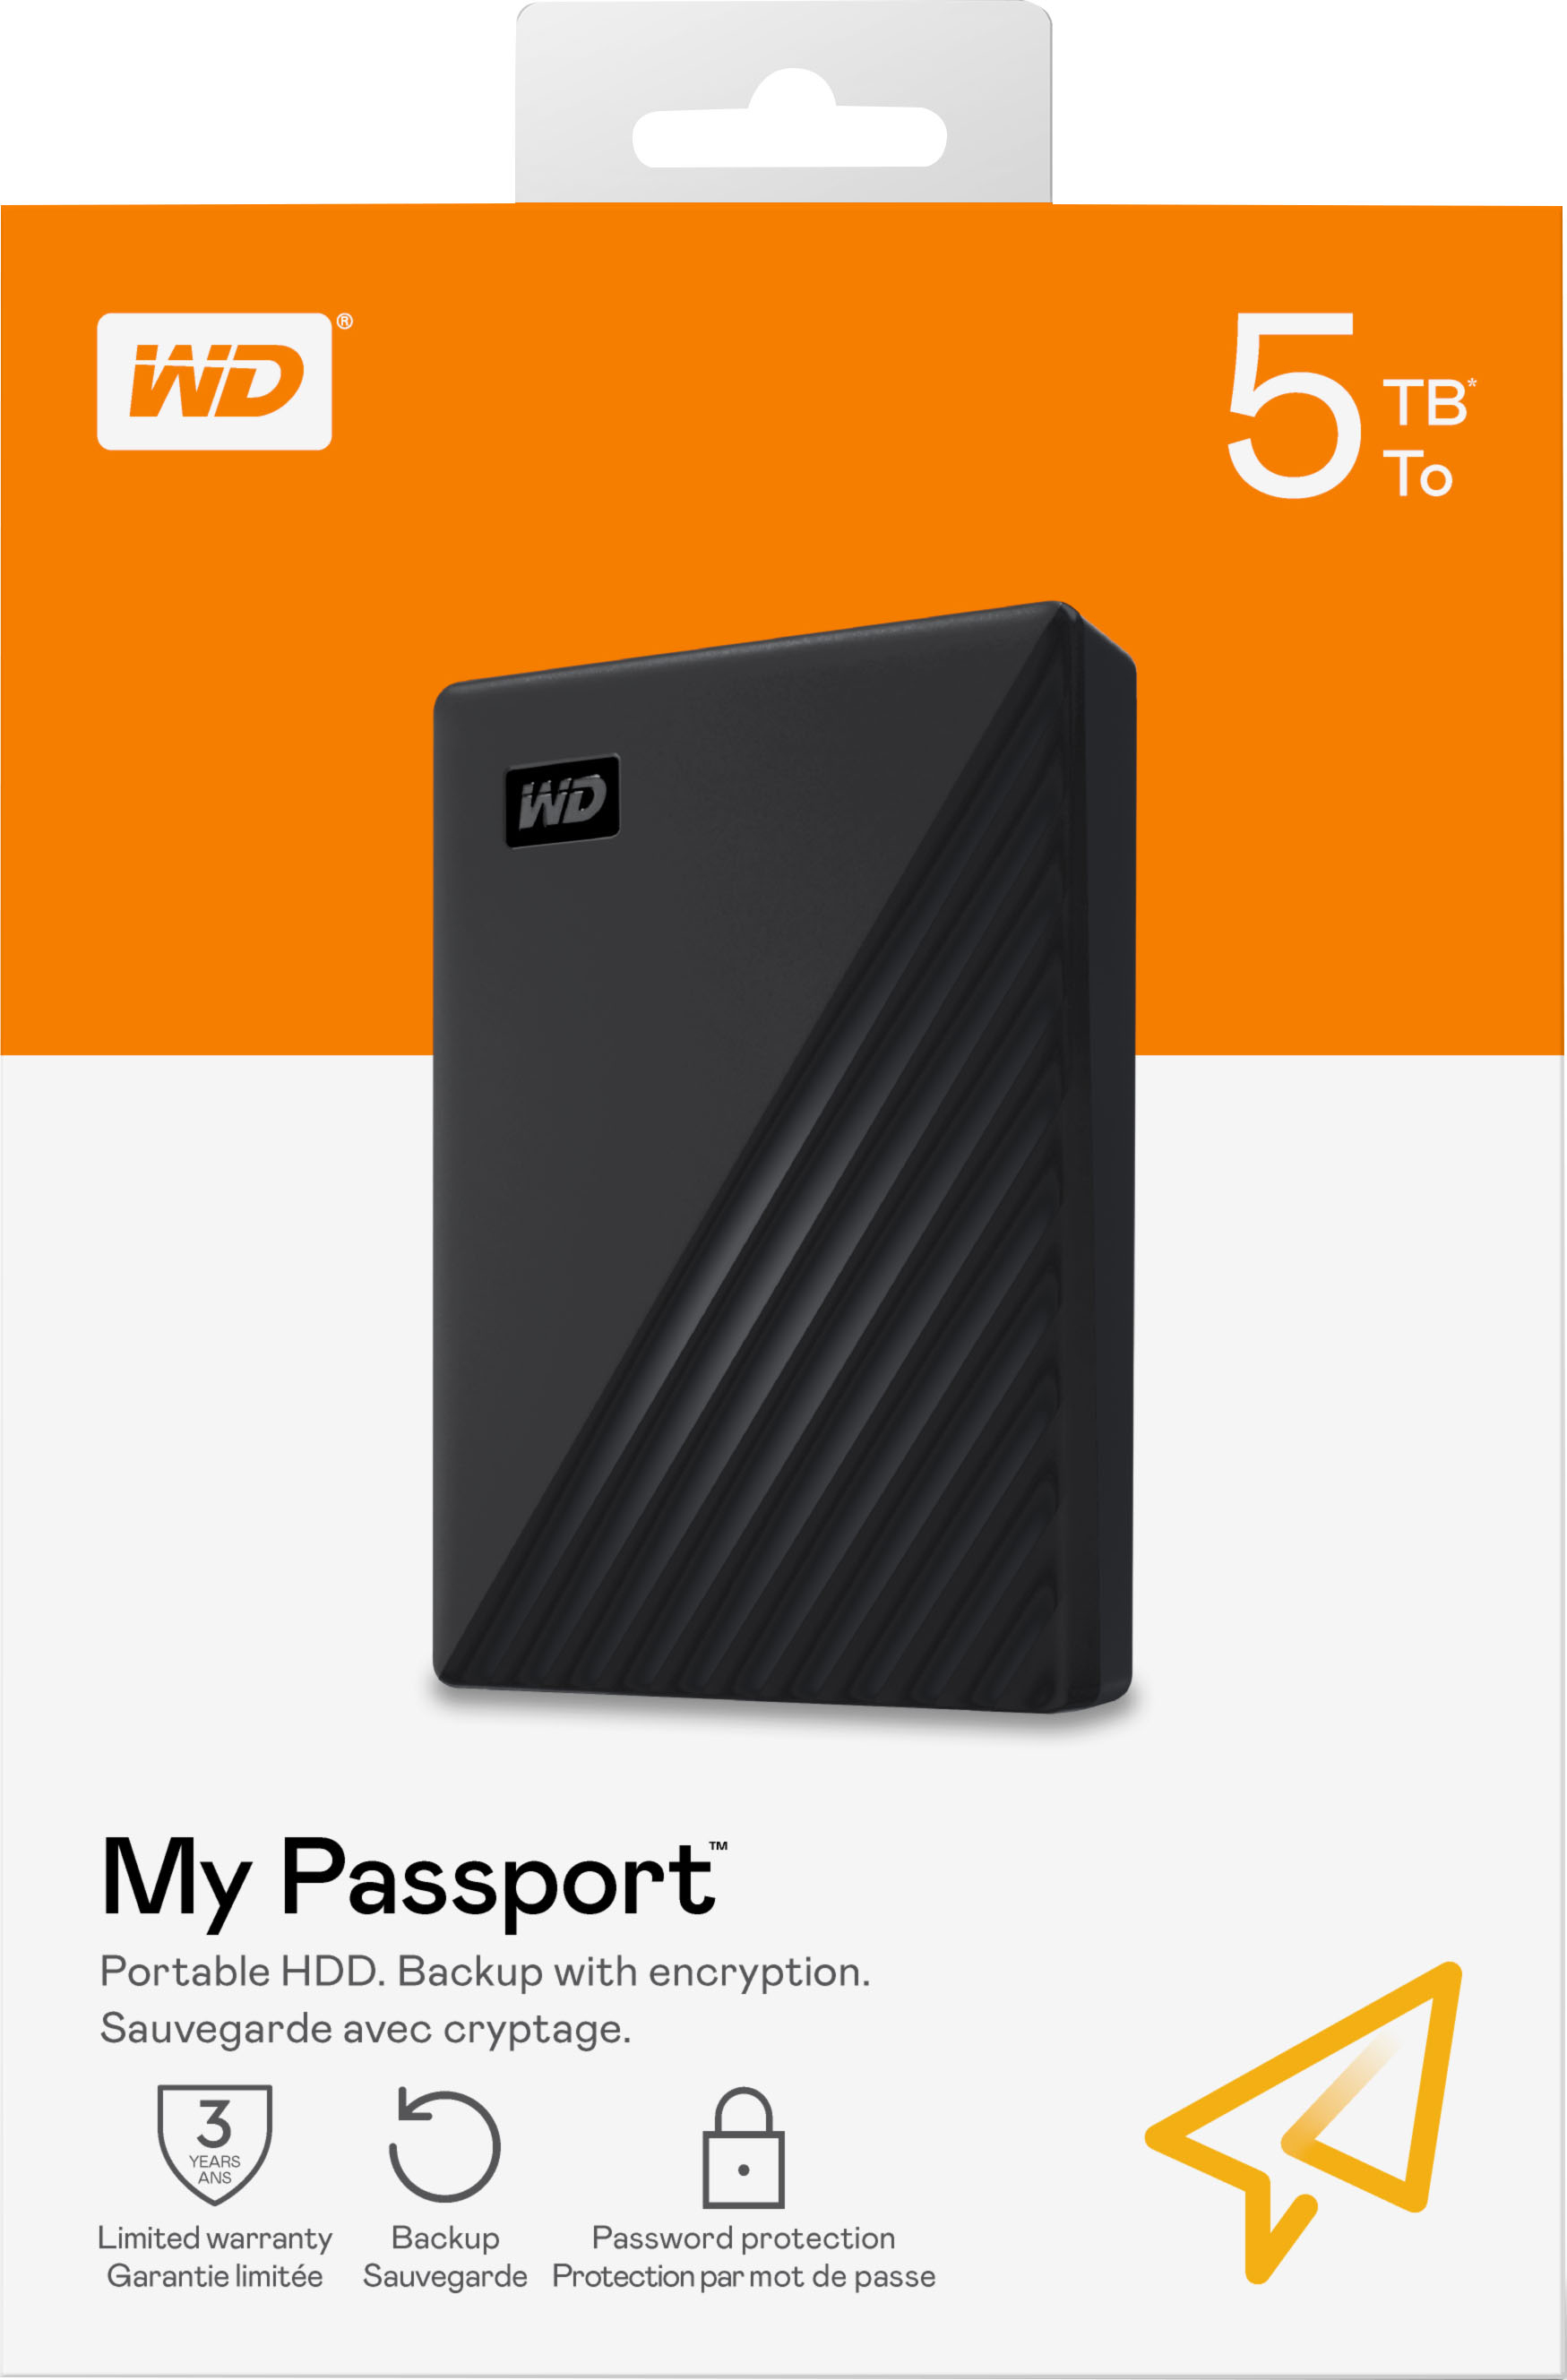 WD My Passport 5TB External USB 3.0 Portable Hard Drive Black